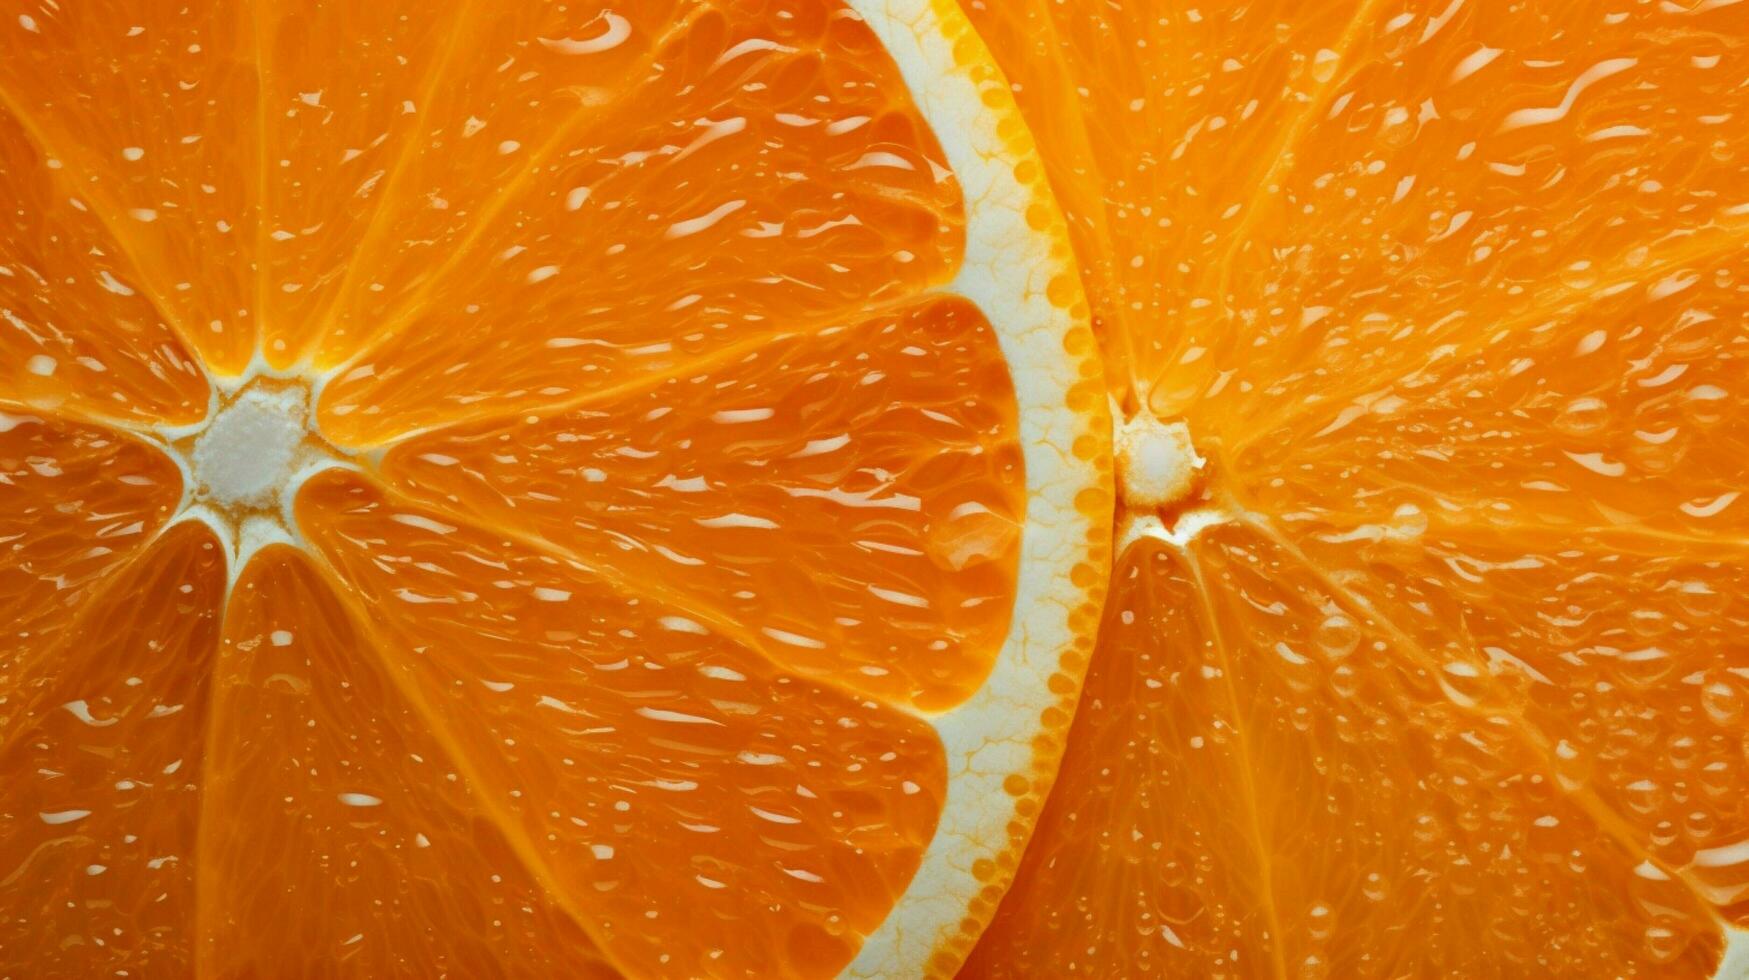 laranja textura Alto qualidade foto